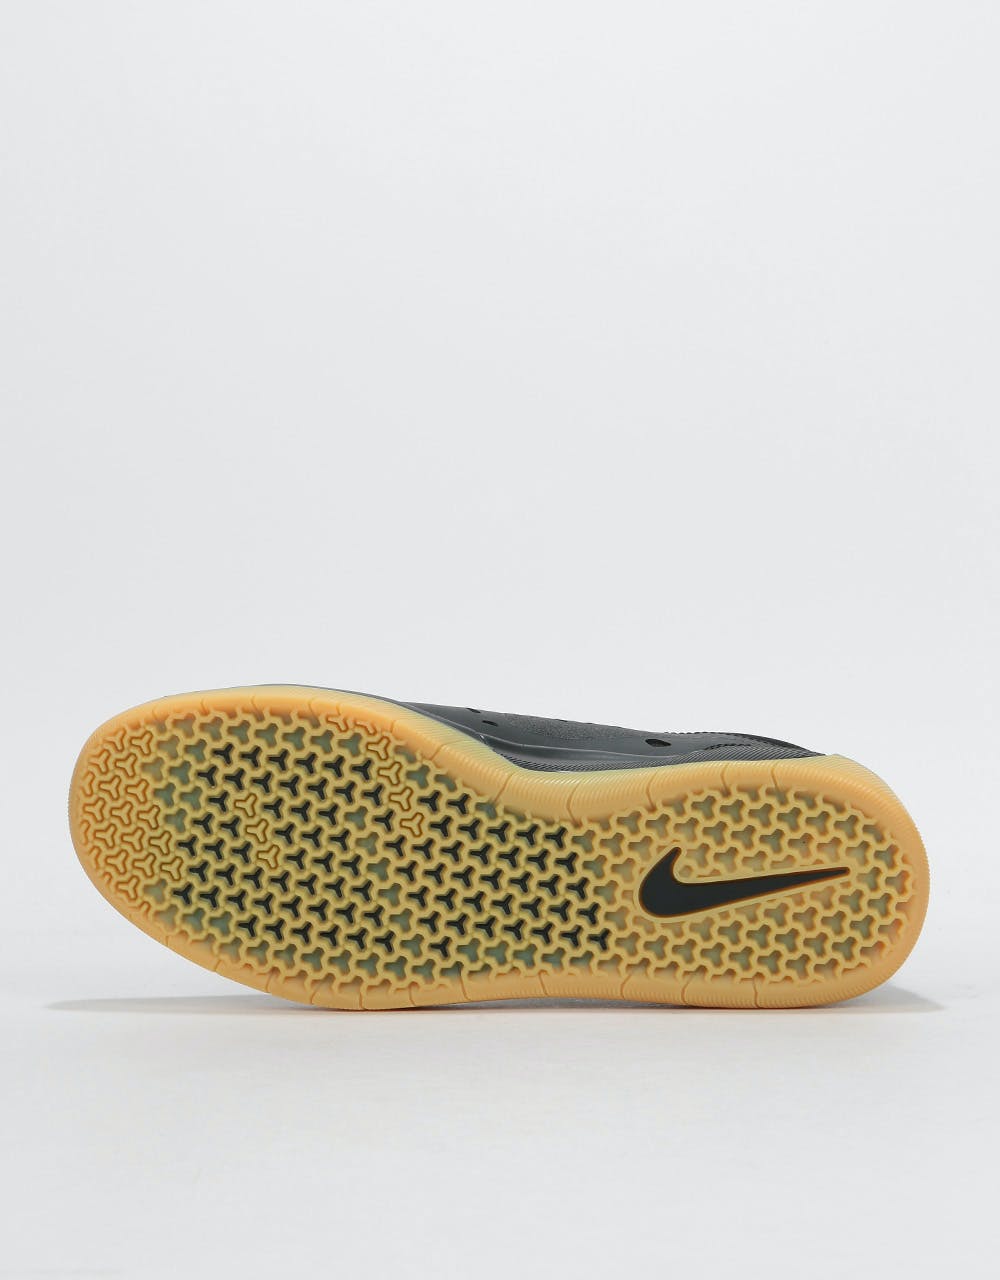 Nike SB Nyjah Free Skate Shoes - Black/Black-Gum Light Brown